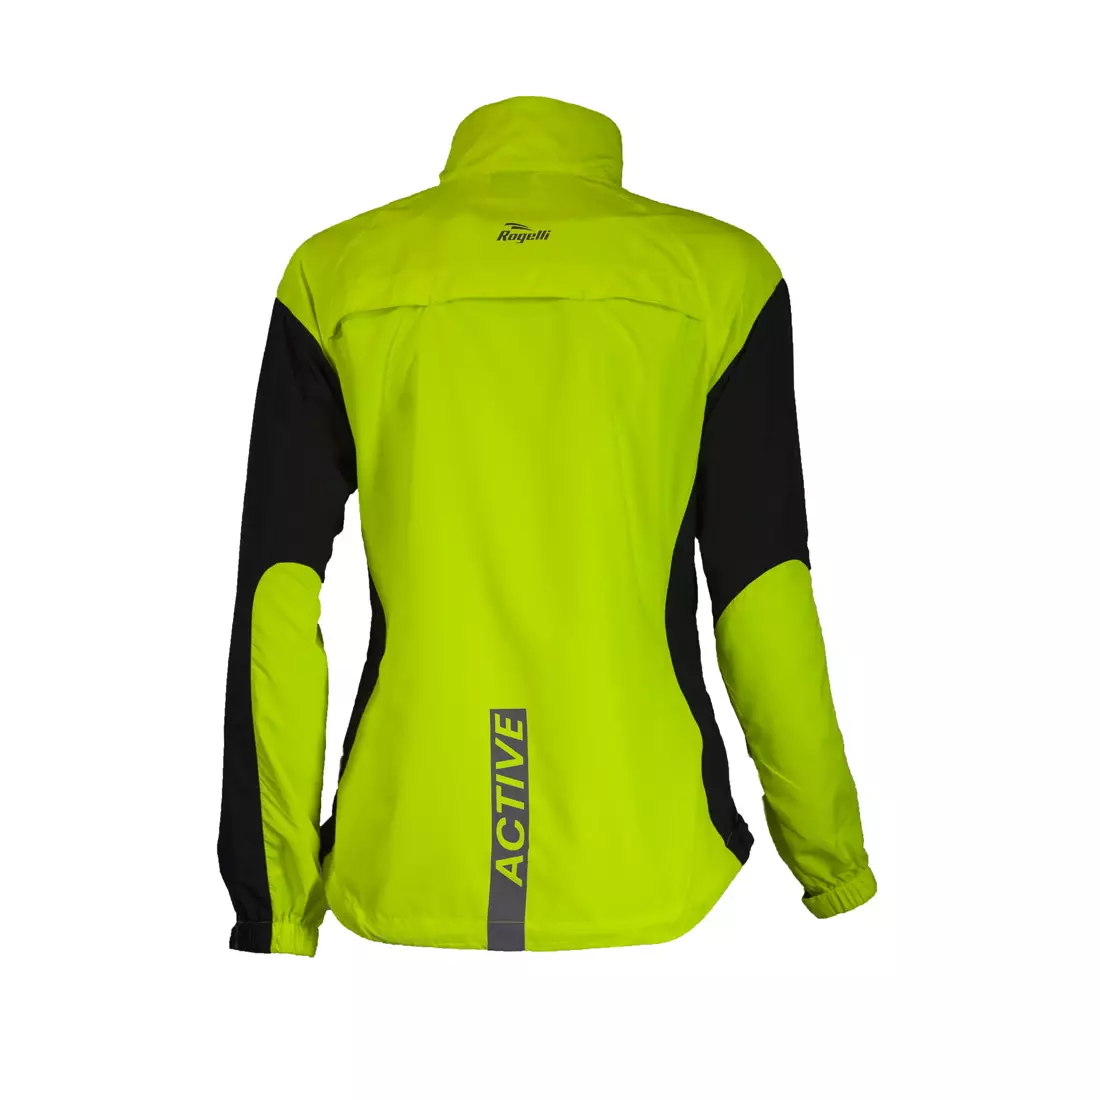 ROGELLI RUN ELVI 820.254- dámská ultralehká běžecká bunda, fluorově černá